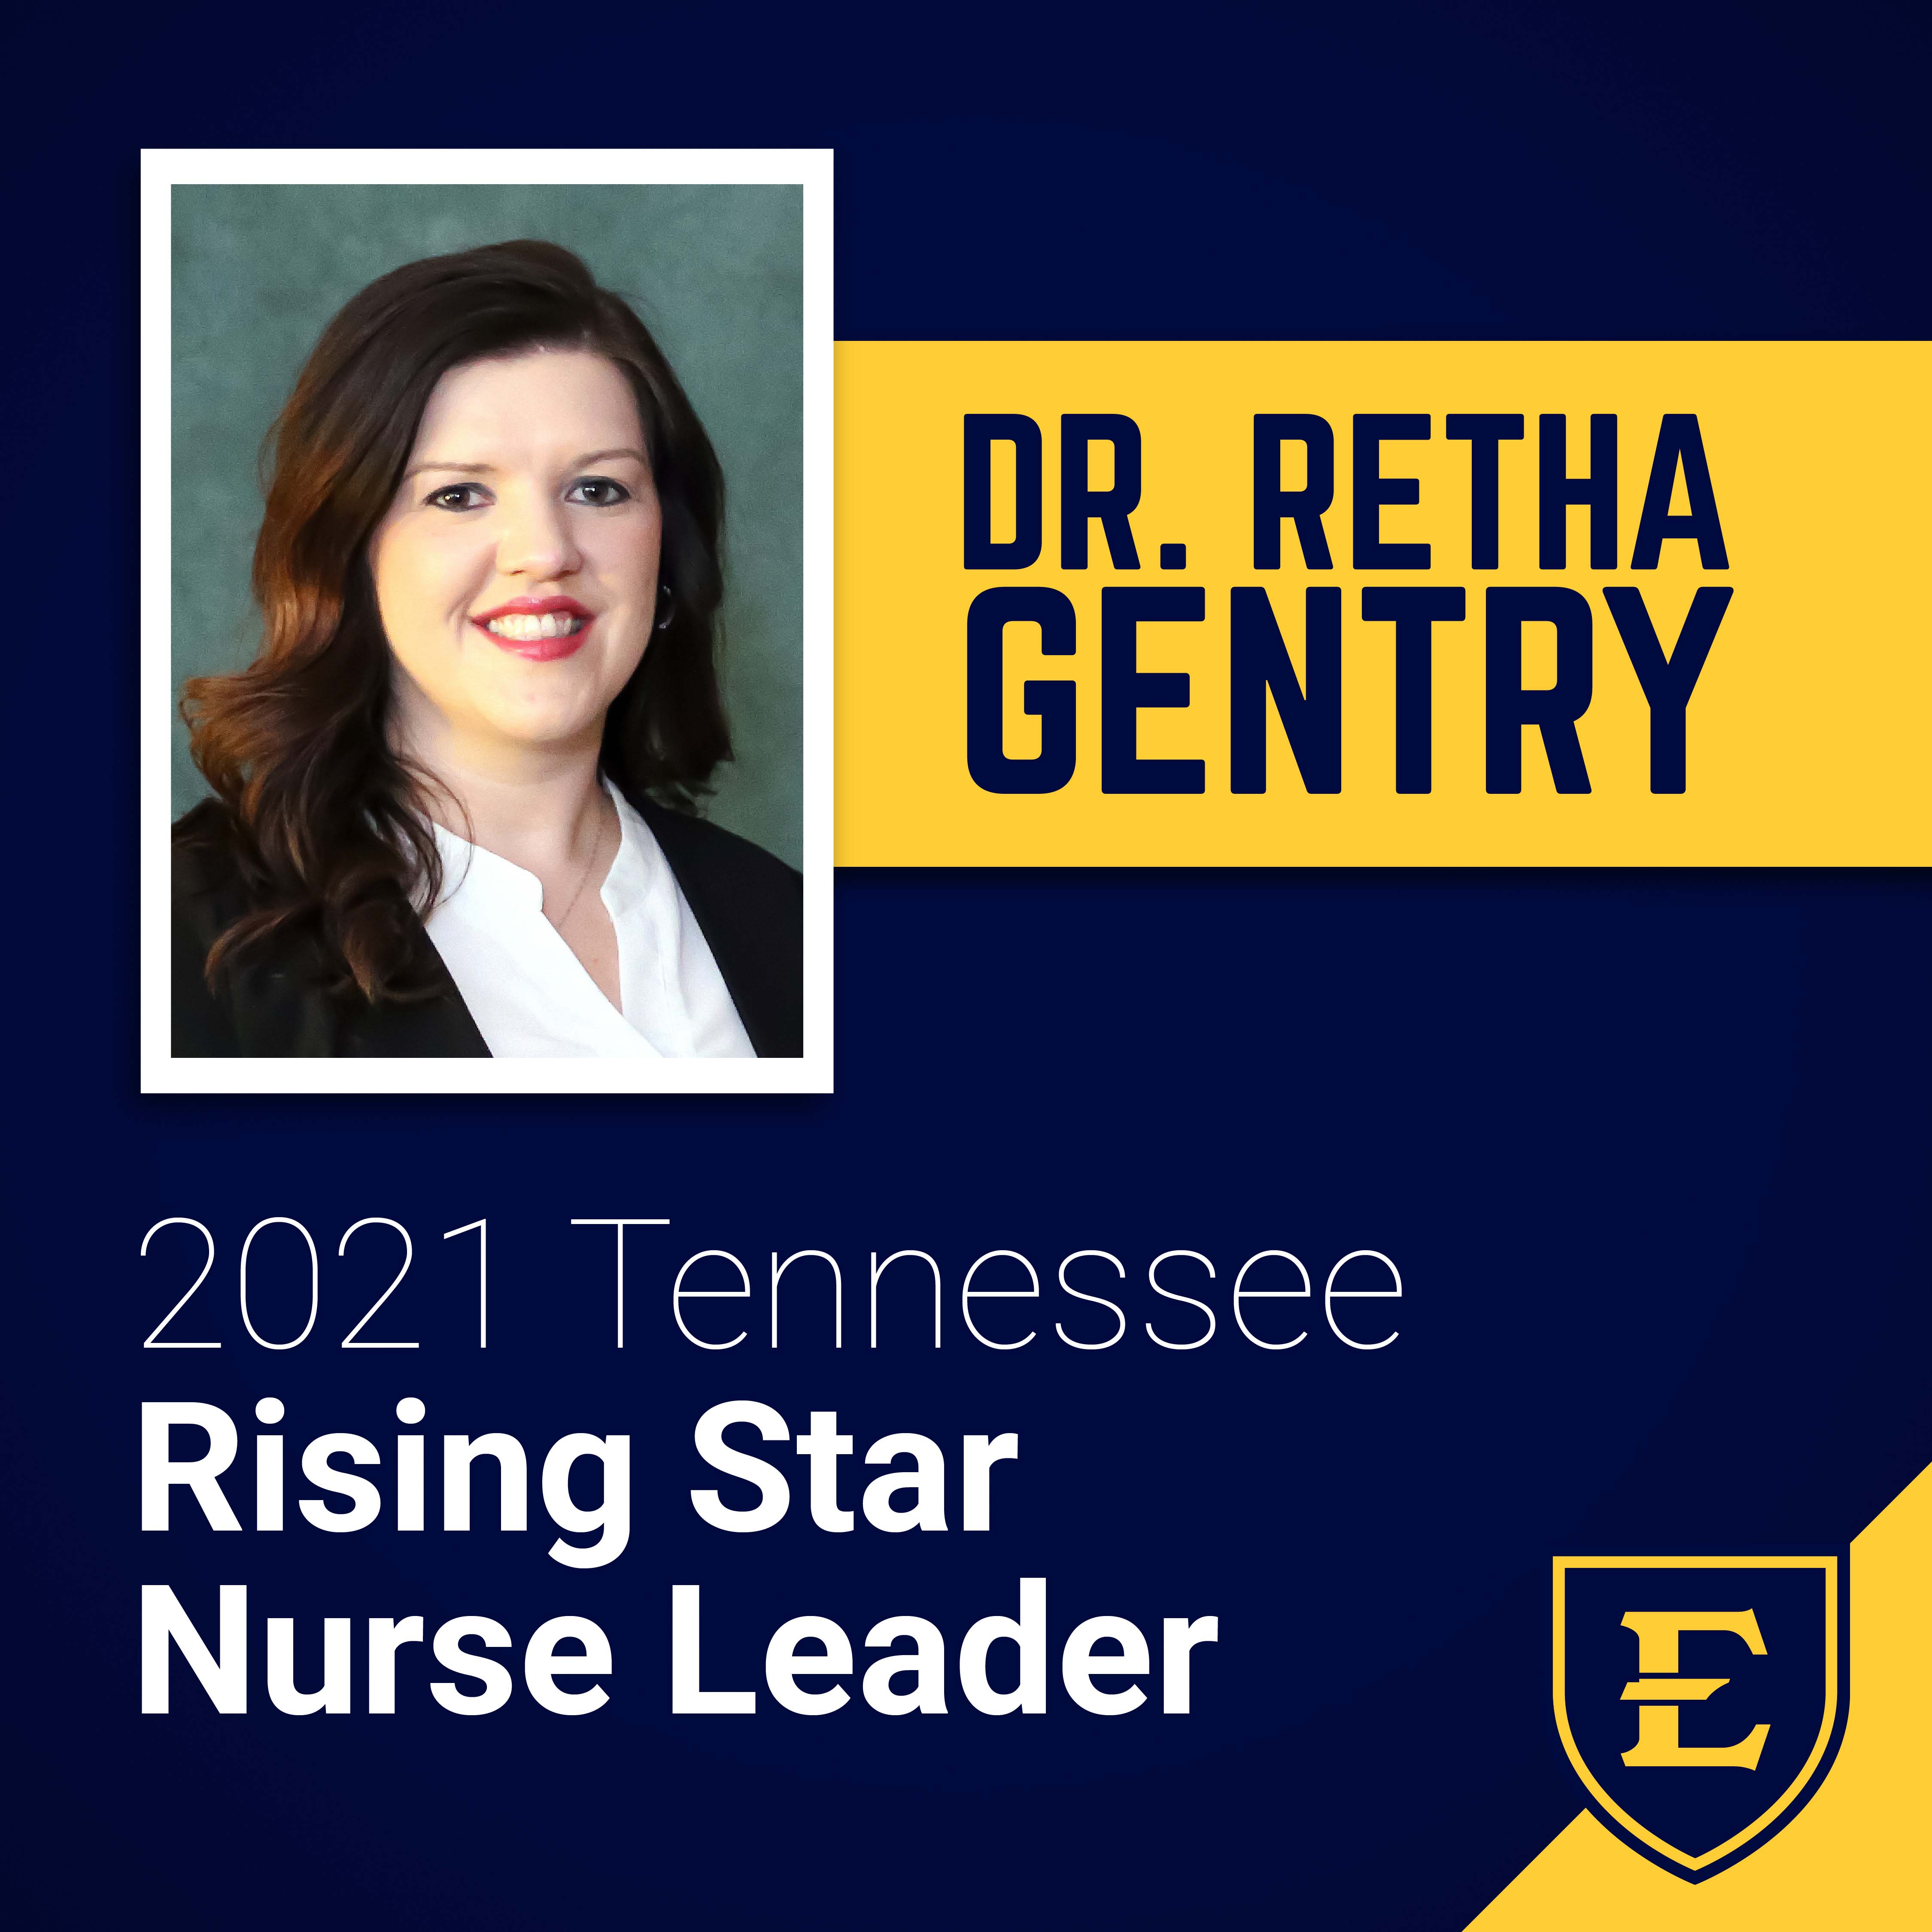 Dr. Retha Gentry